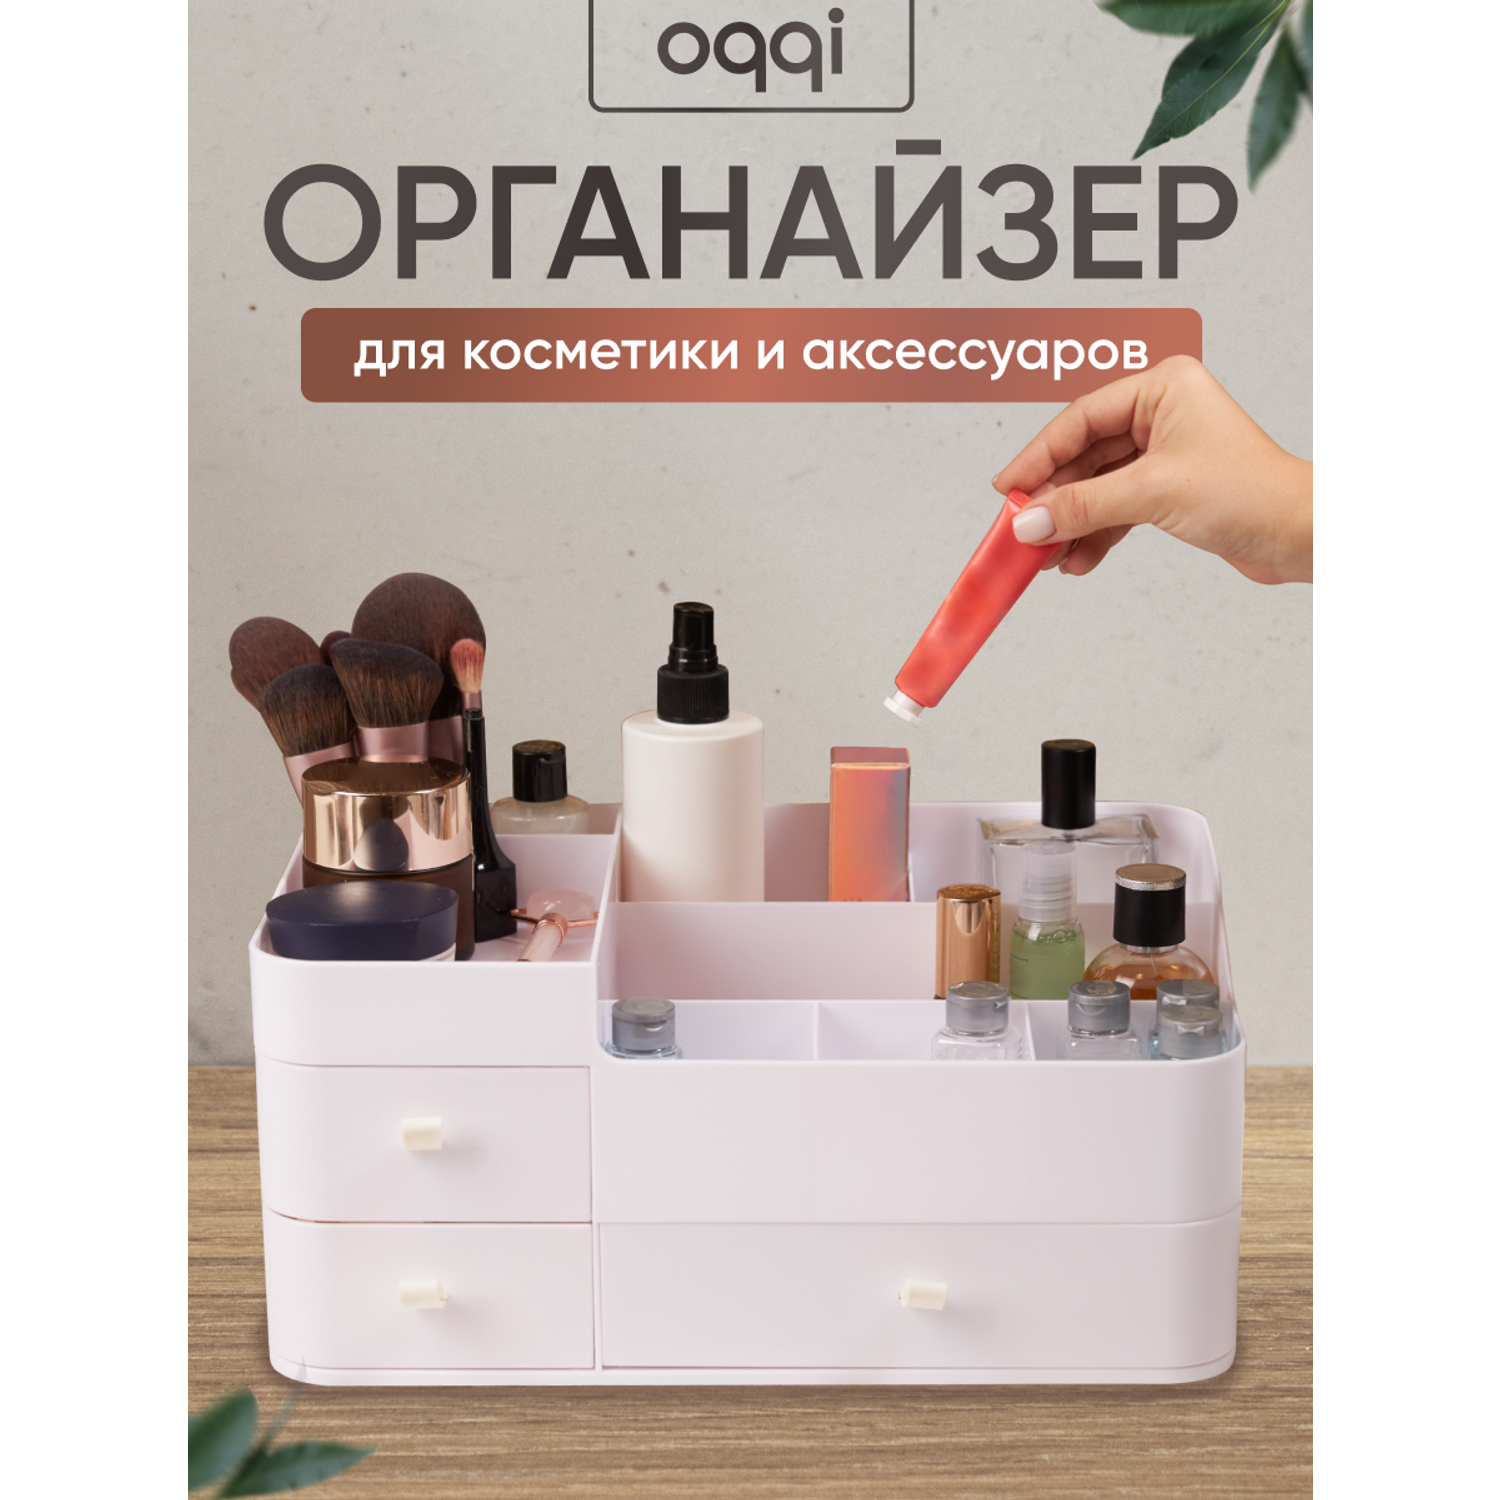 Органайзер для косметики oqqi и аксессуаров - фото 1